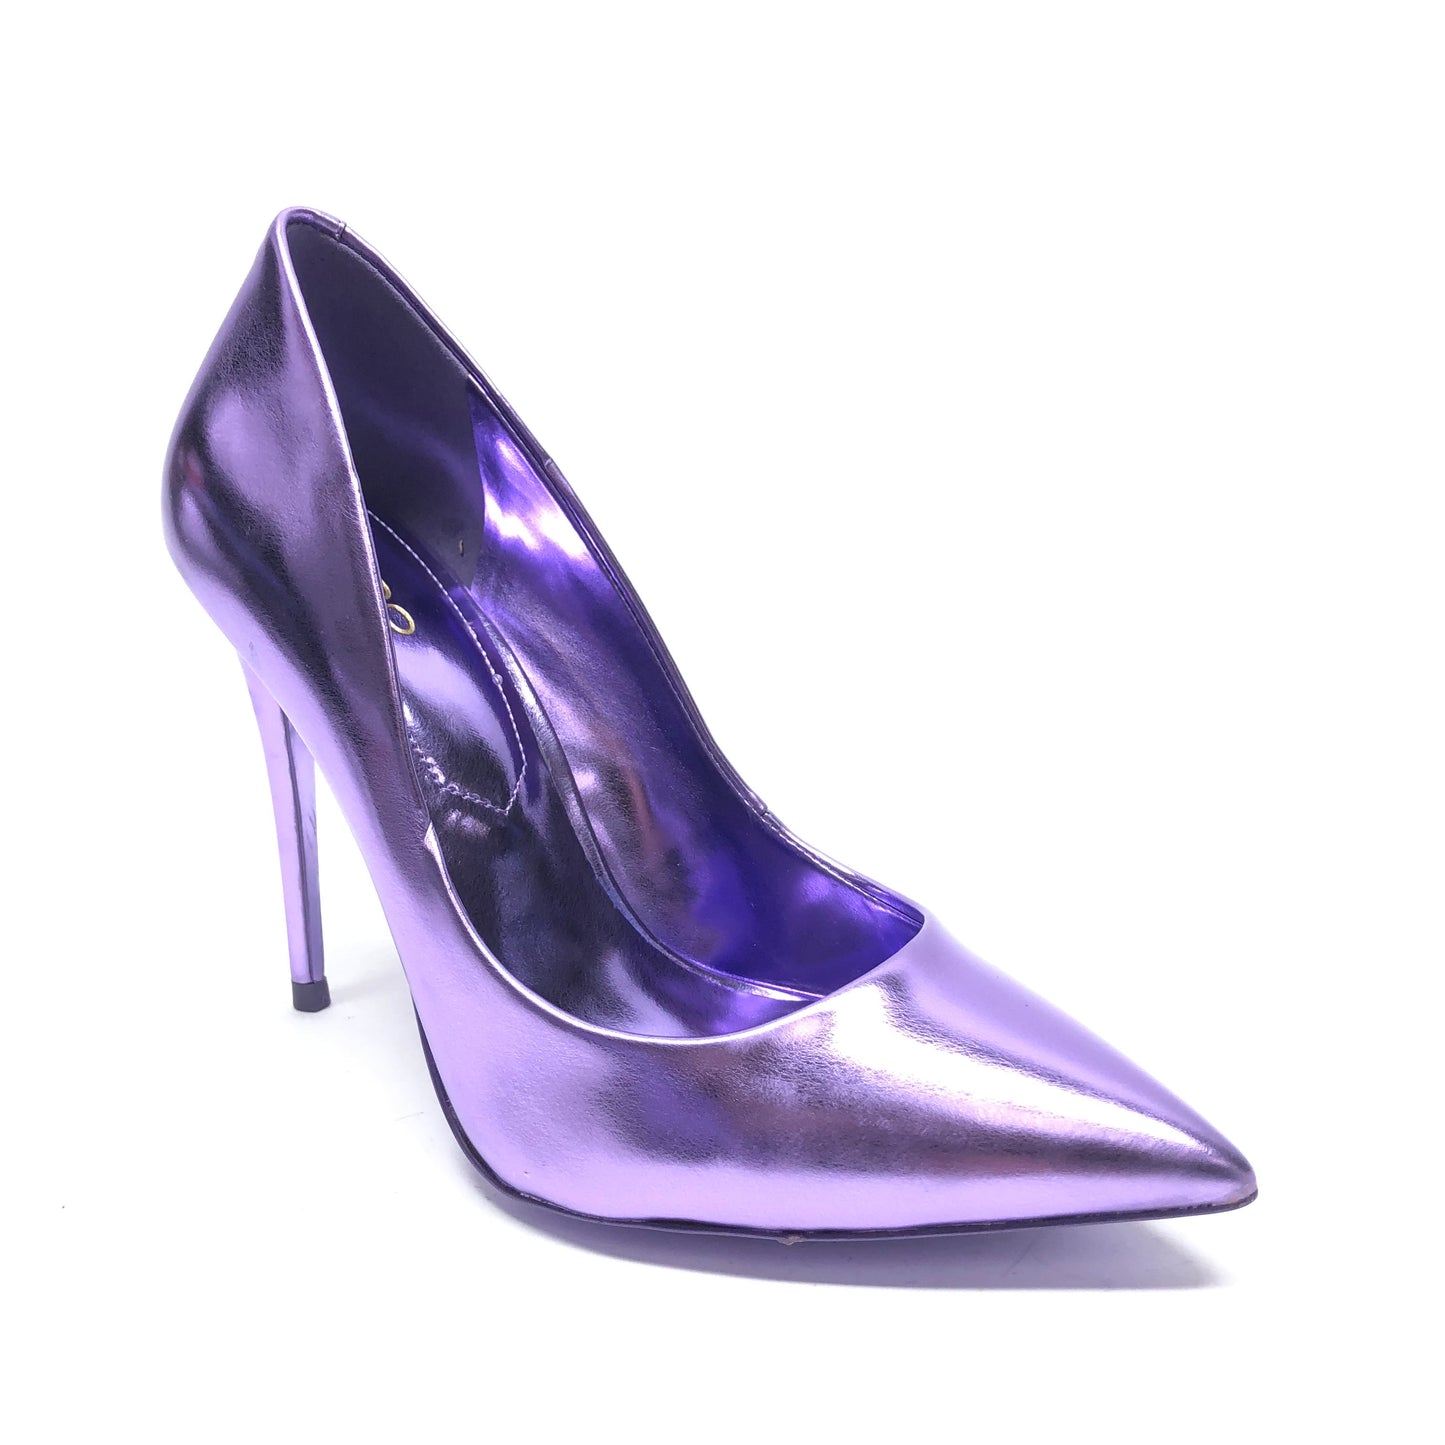 Purple Shoes Heels Stiletto Aldo, Size 6